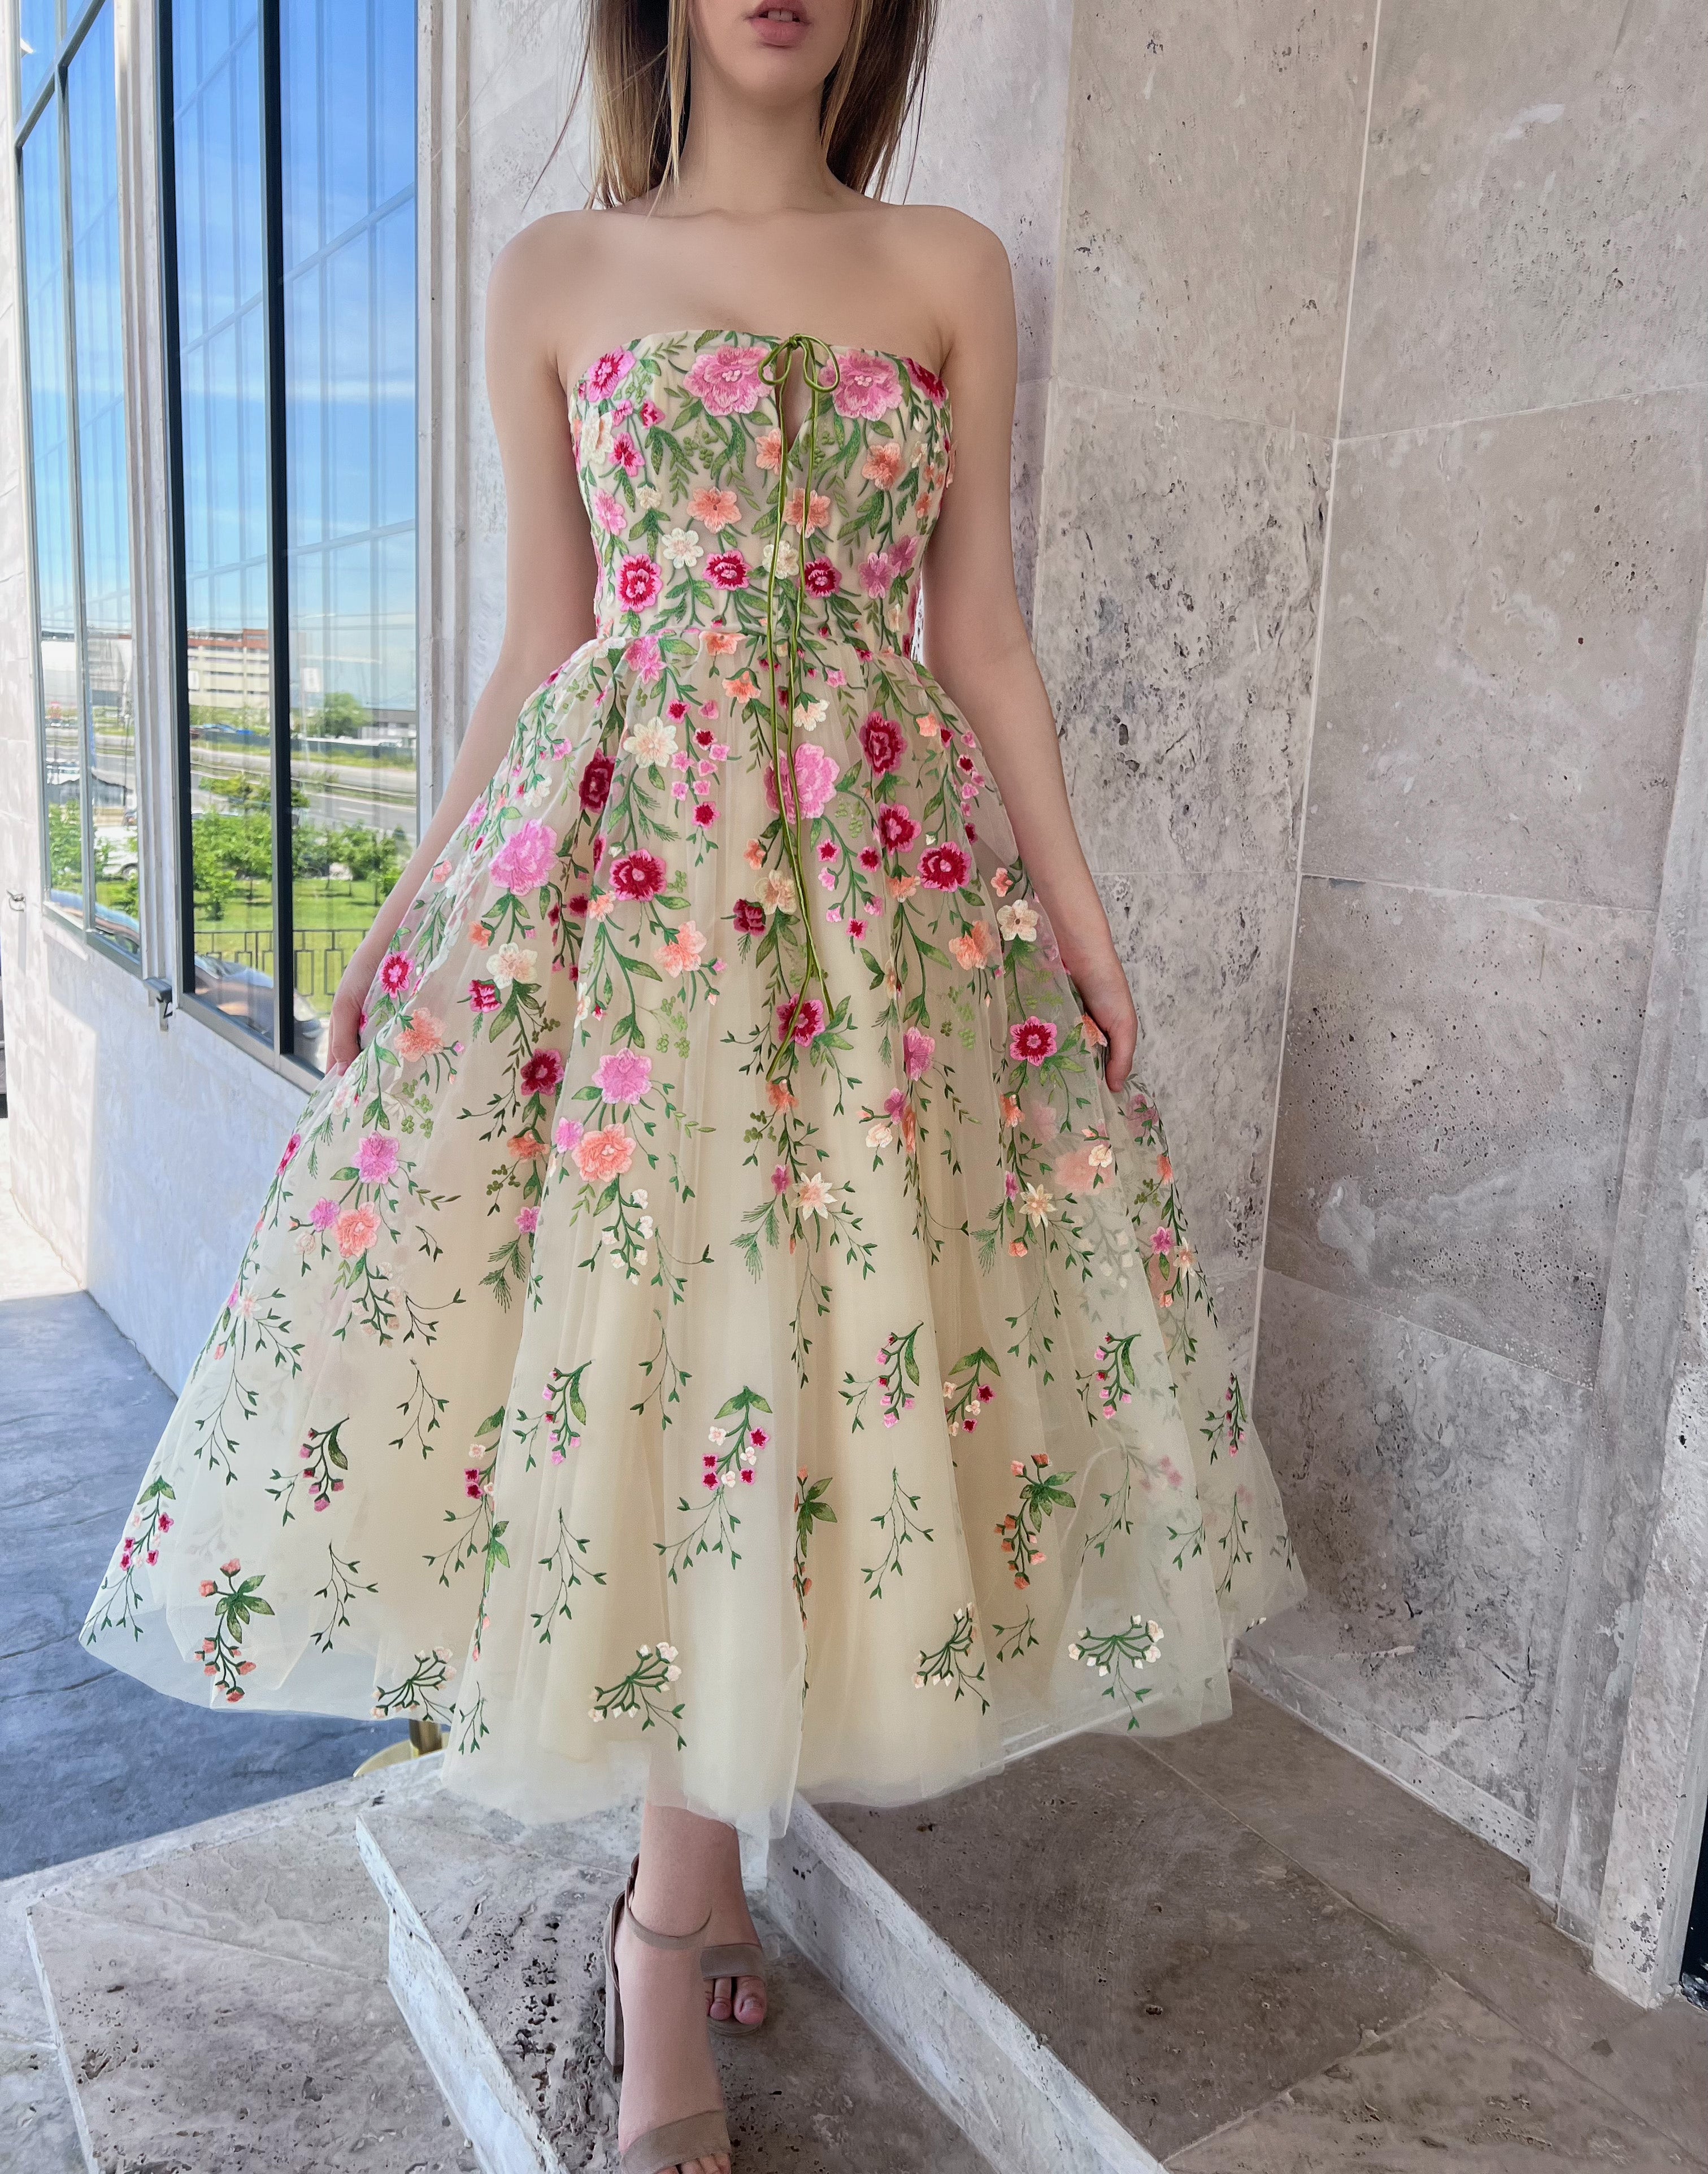 wildflower dress